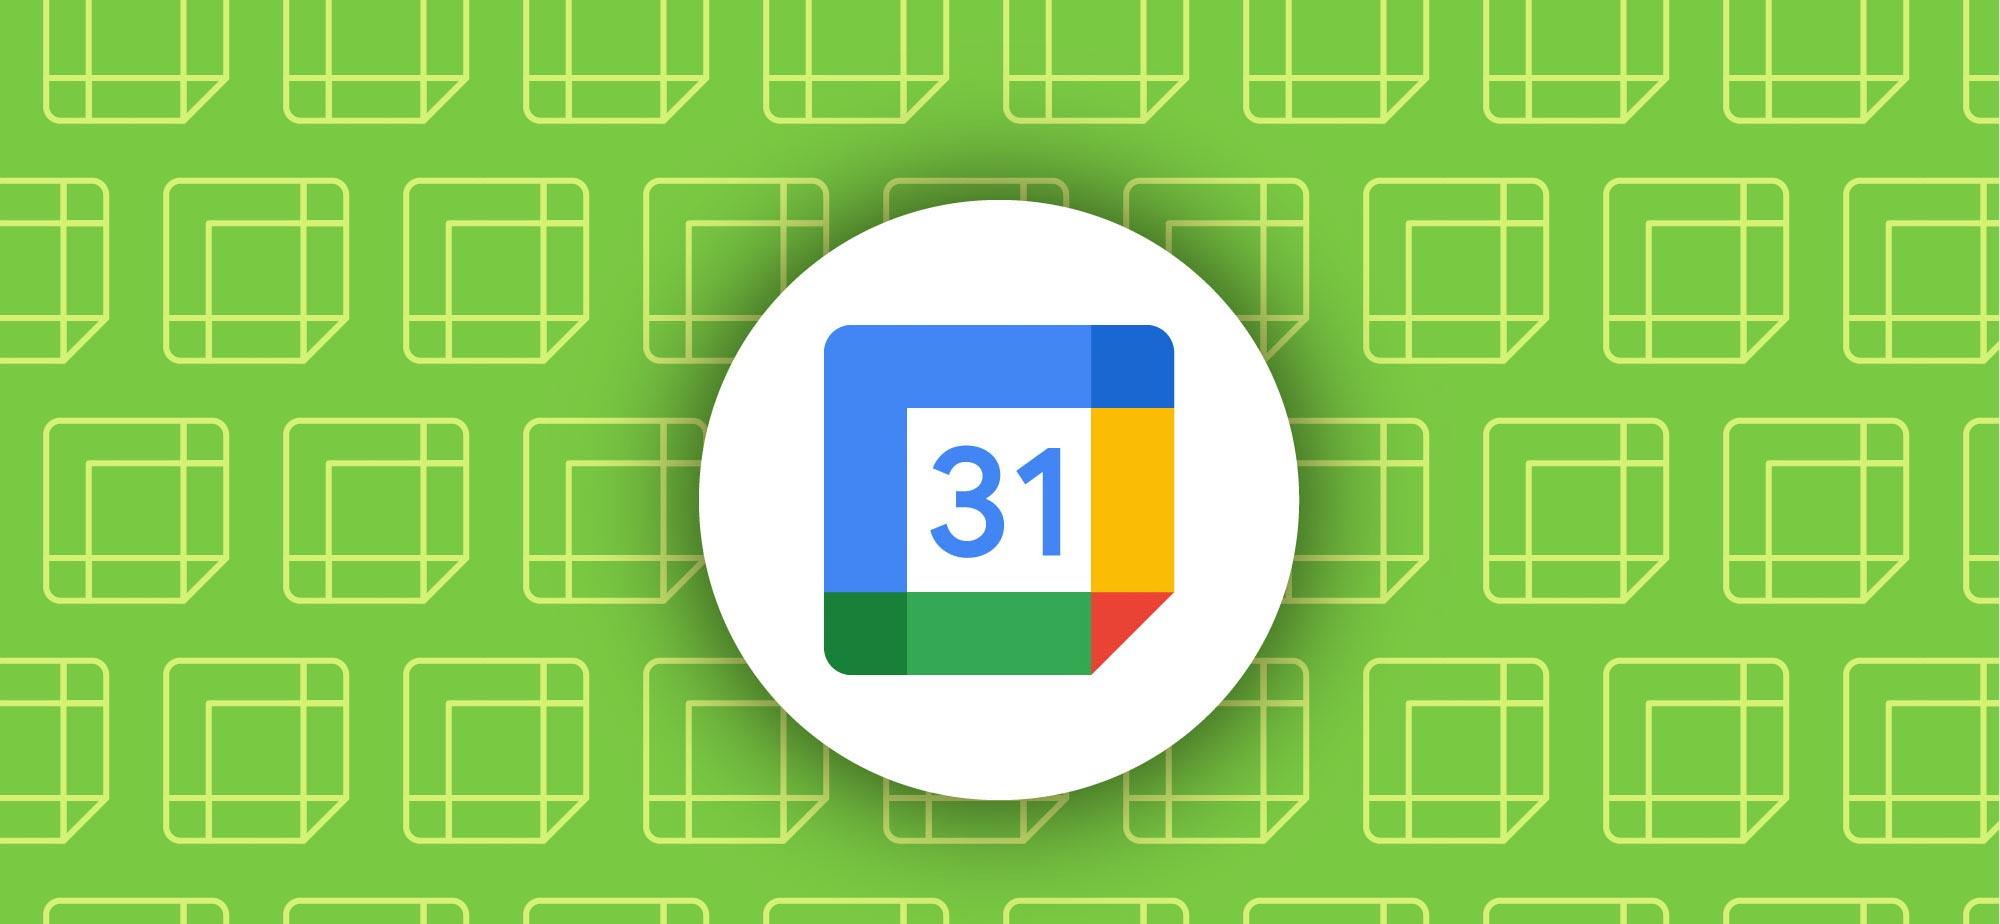 Google Calendar for iPhone: Introducing Convenient Lockscreen Widgets